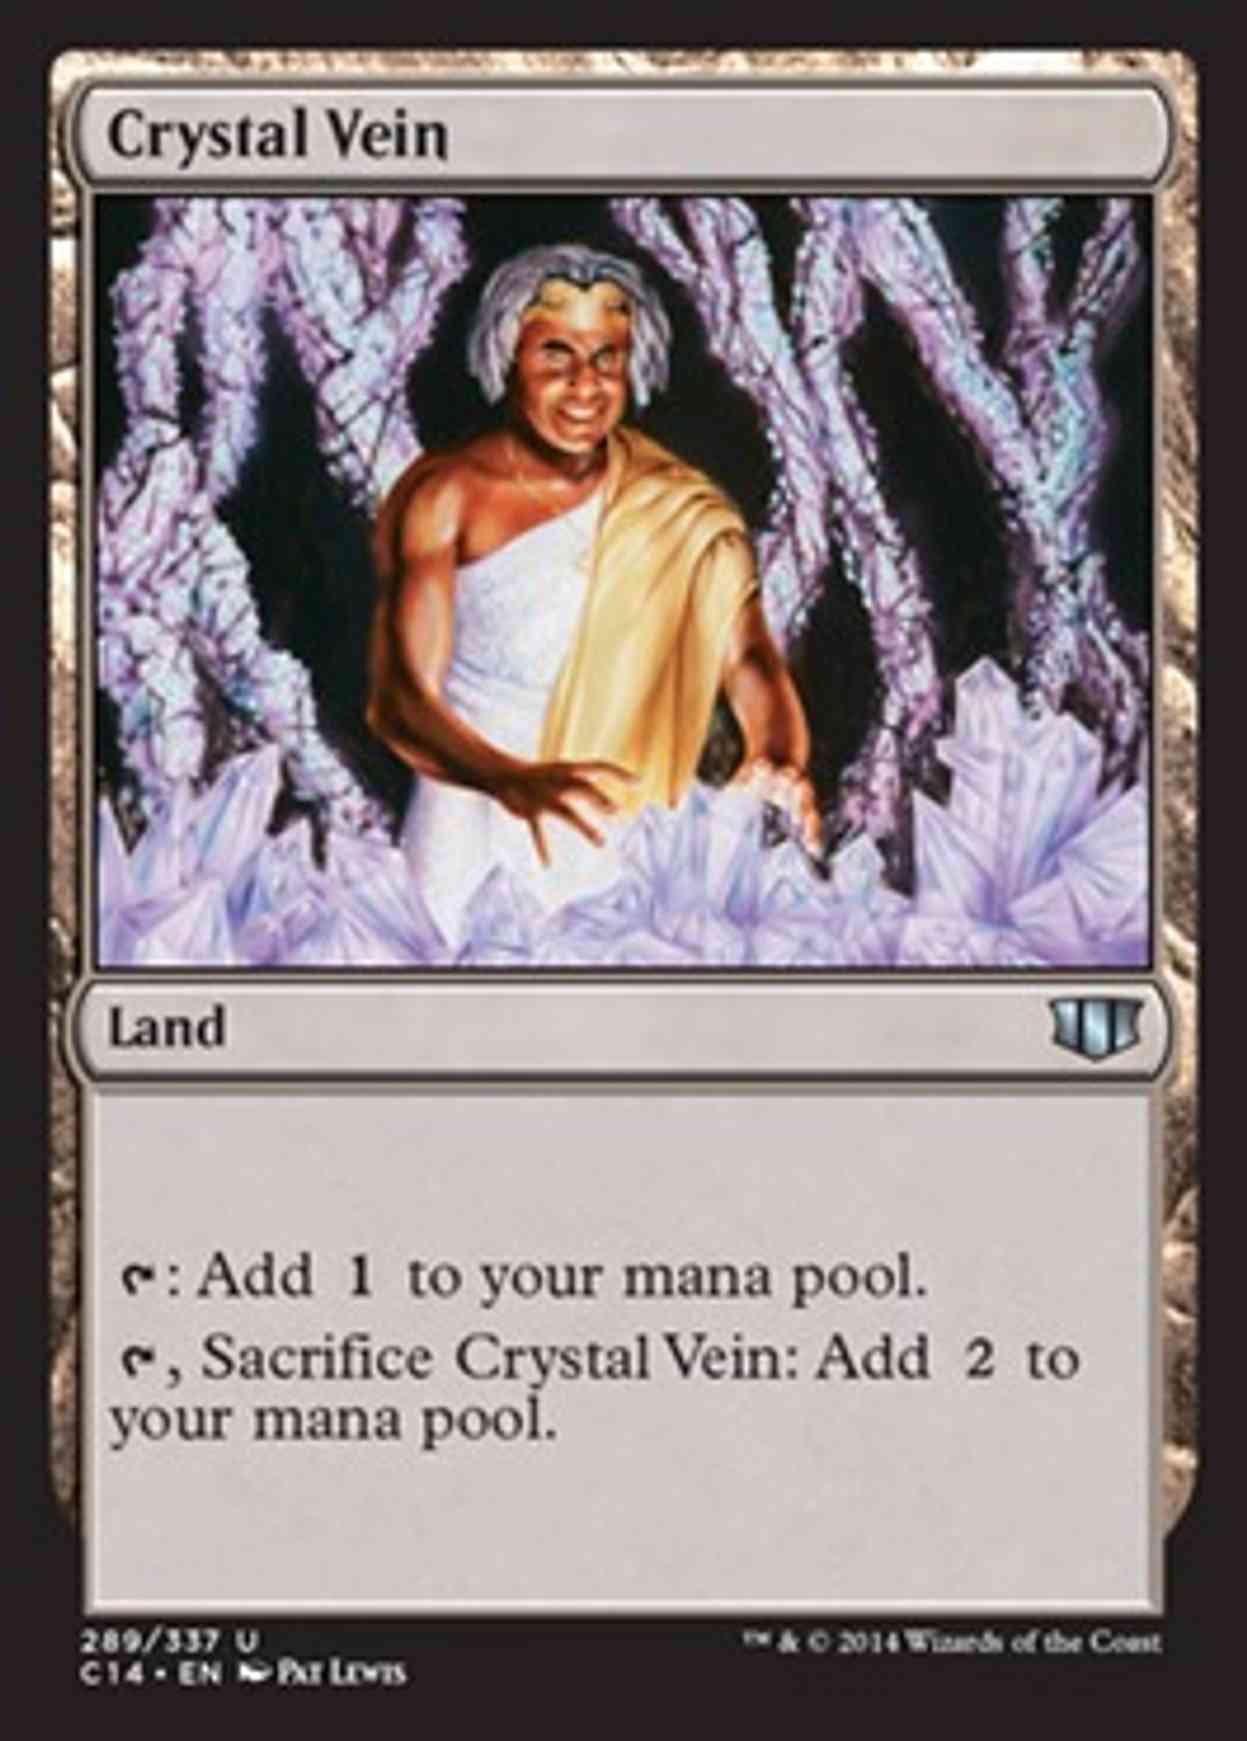 Crystal Vein magic card front